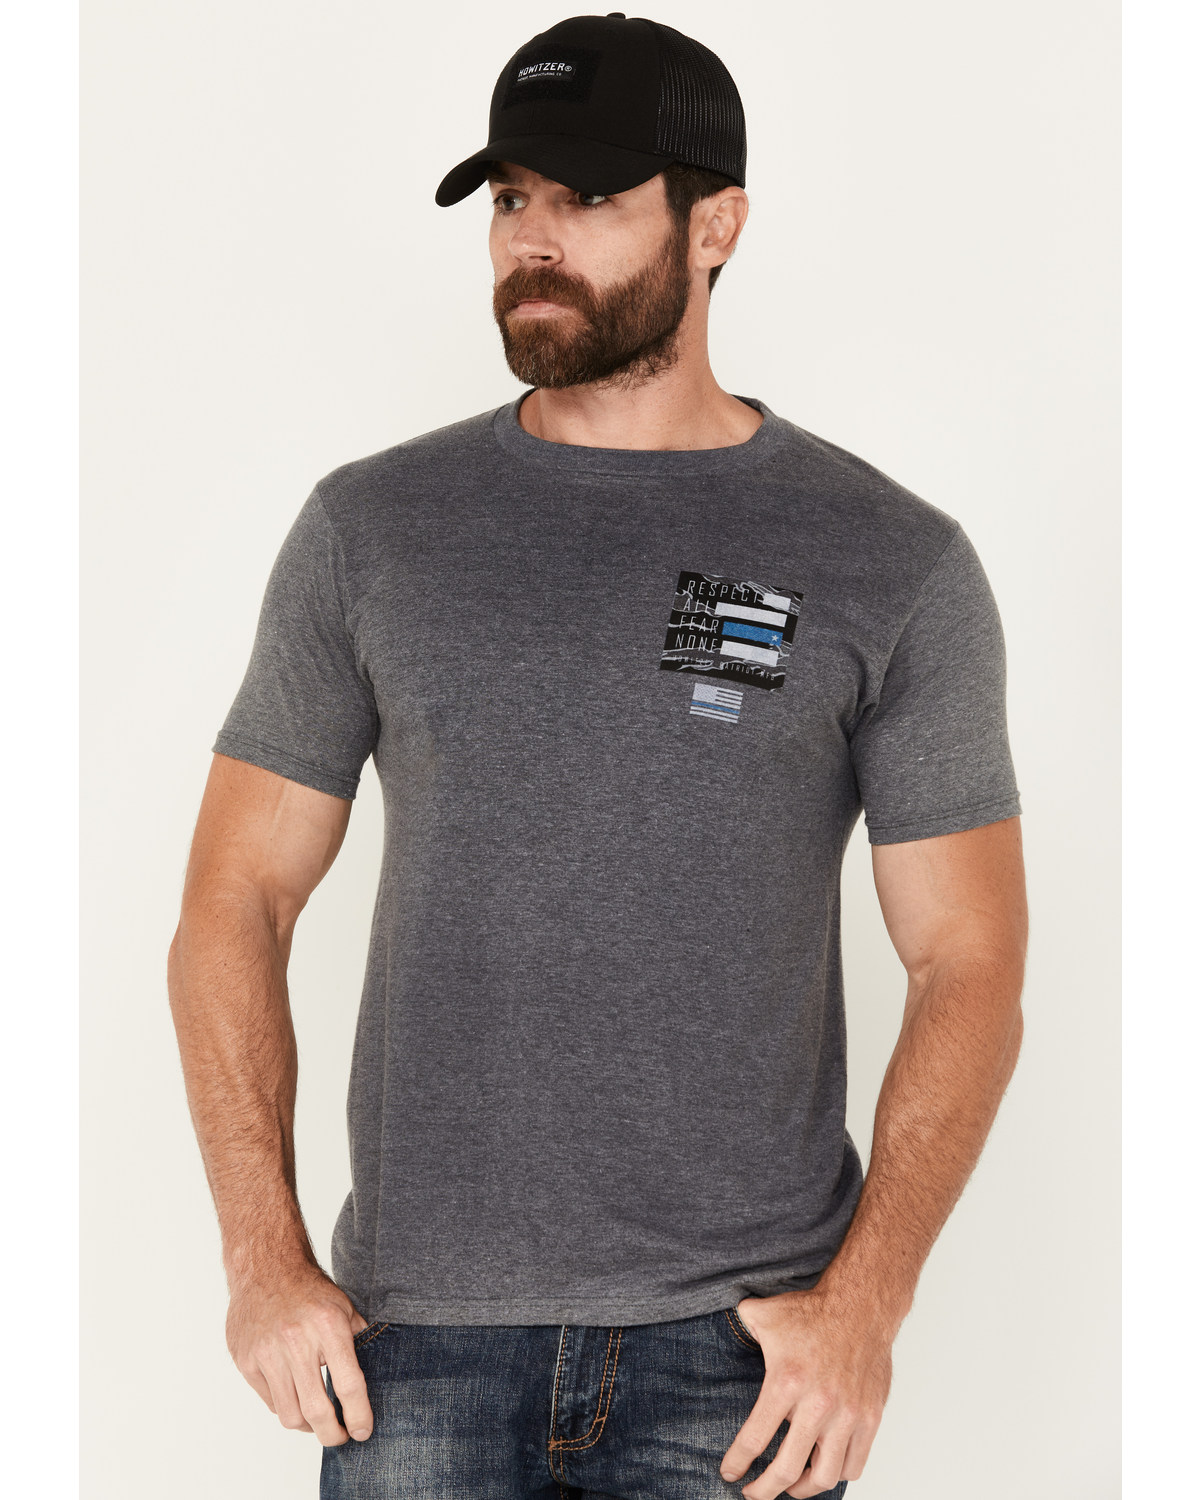 Howitzer Men's No Fear Short Sleeve Graphic T-Shirt